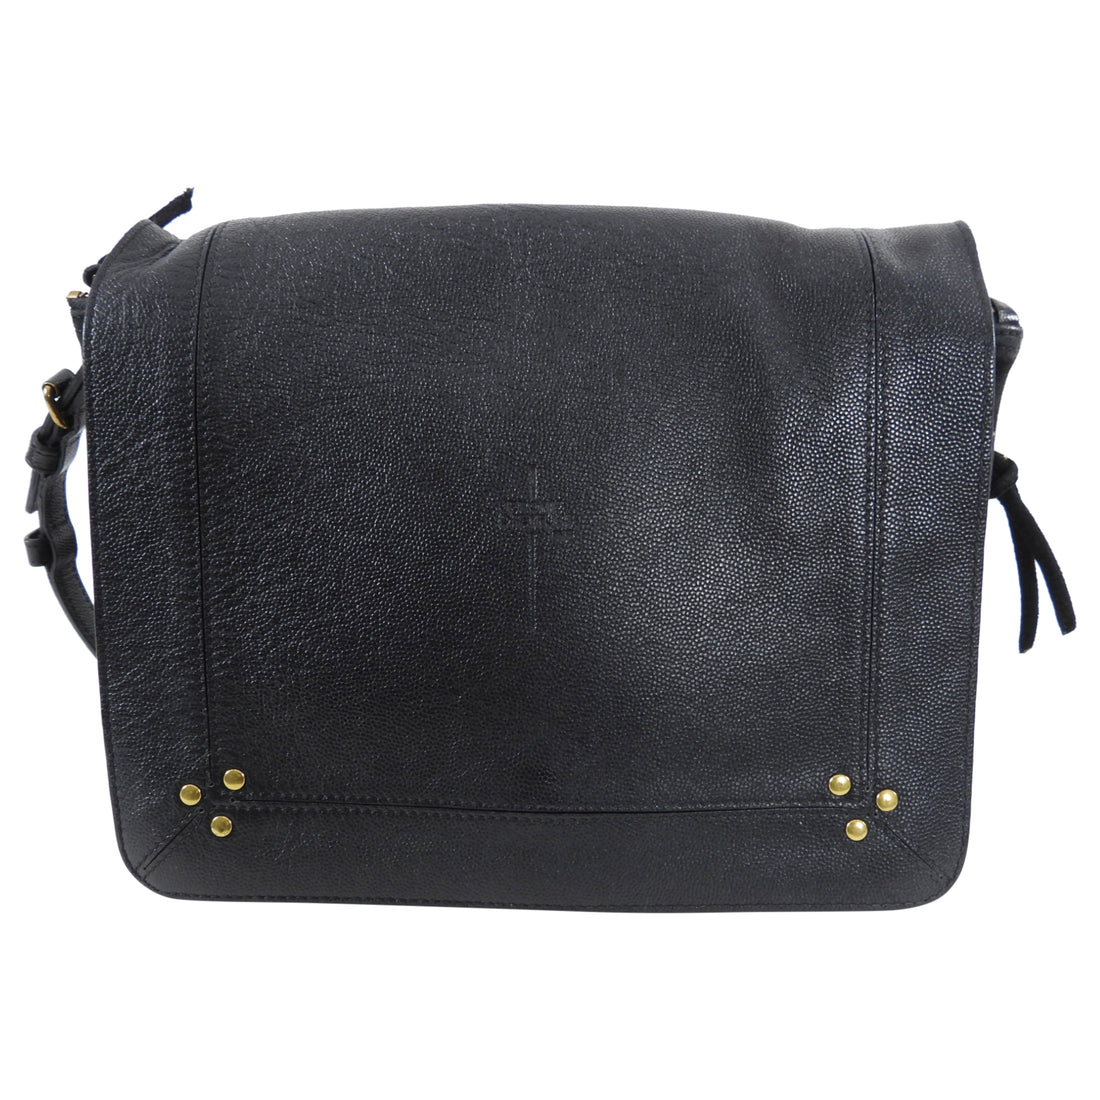 Jerome Dreyfuss Black Leather Crossbody Bag